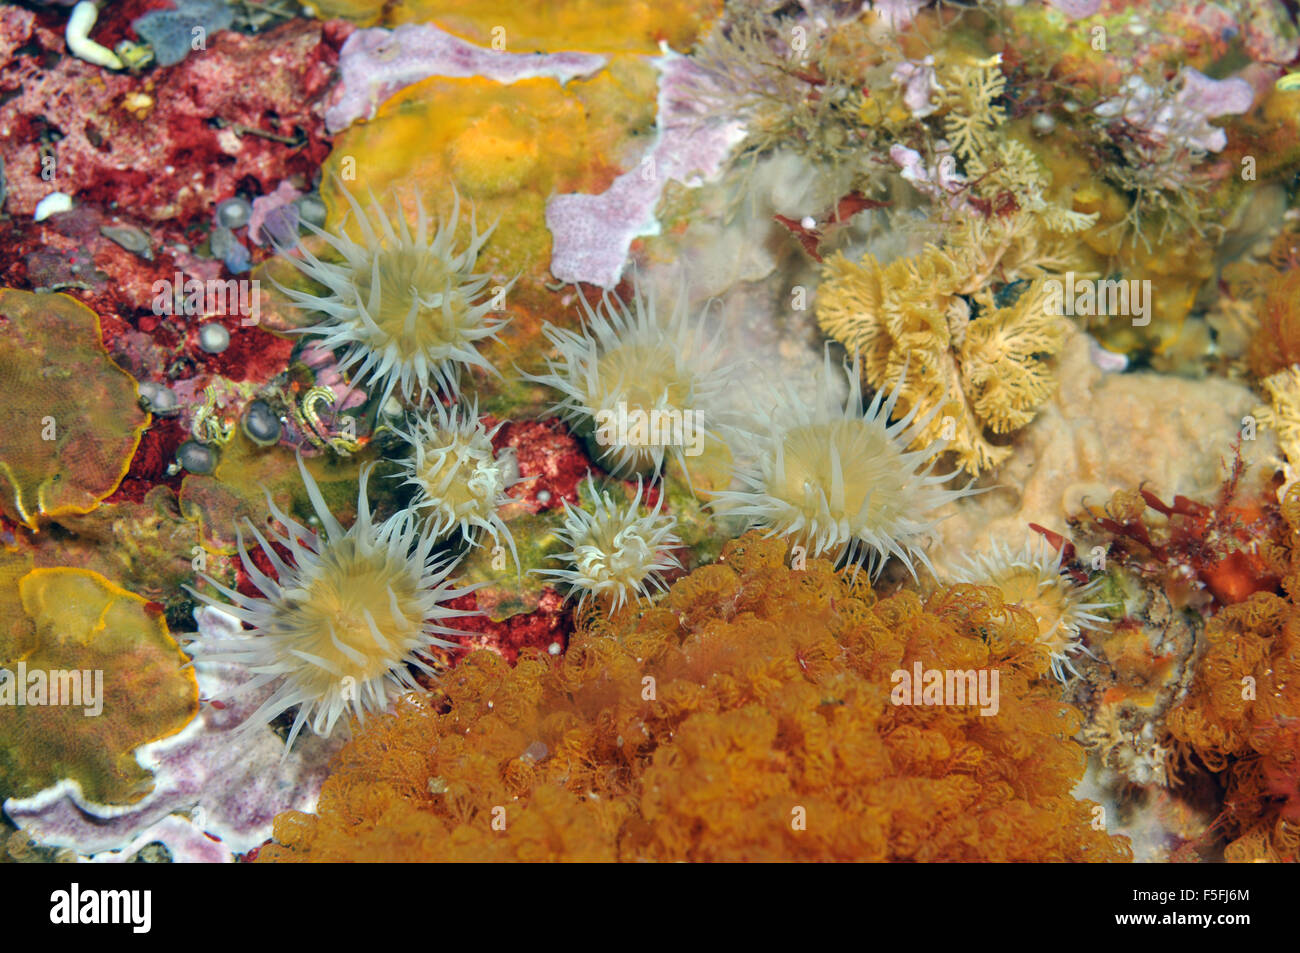 Bianca a strisce anemone, Actinothoe albocincta, tra i coralli e spugne, POVERI CAVALIERI Isole Riserva Naturale, Nuova Zelanda Foto Stock